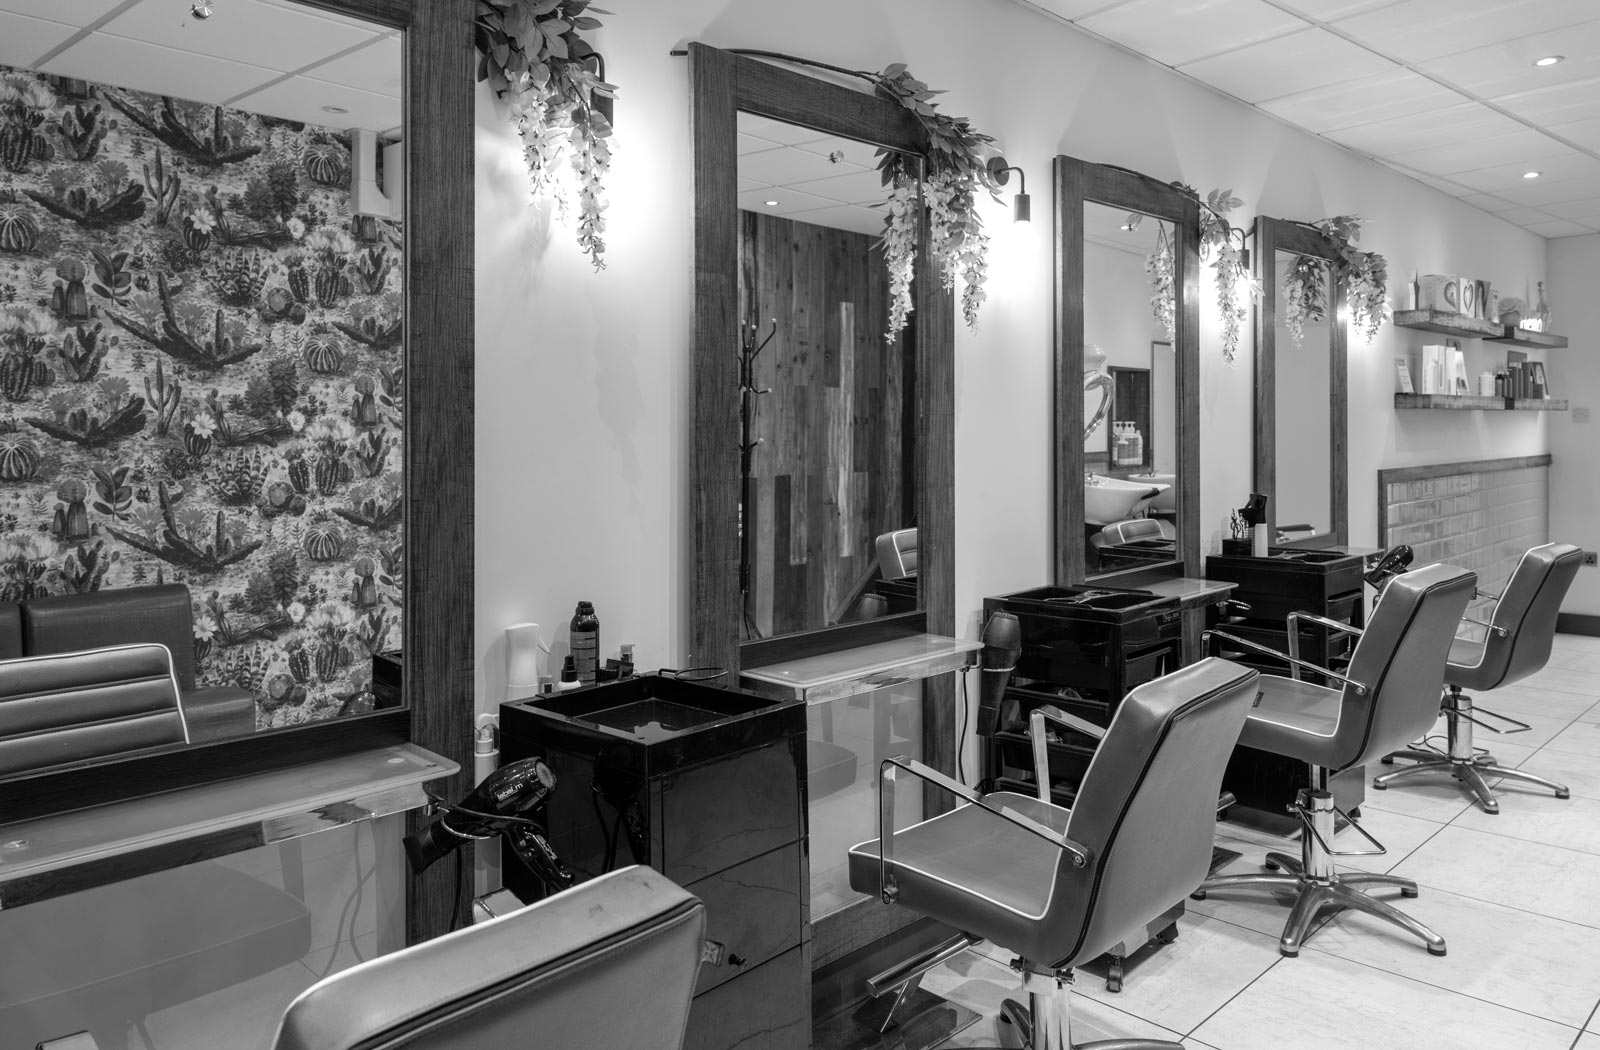 Inside the salon, downstairs at Manoj Coffee & Cuts, 10 Ludgate Broadway, London EC4V 6DU.